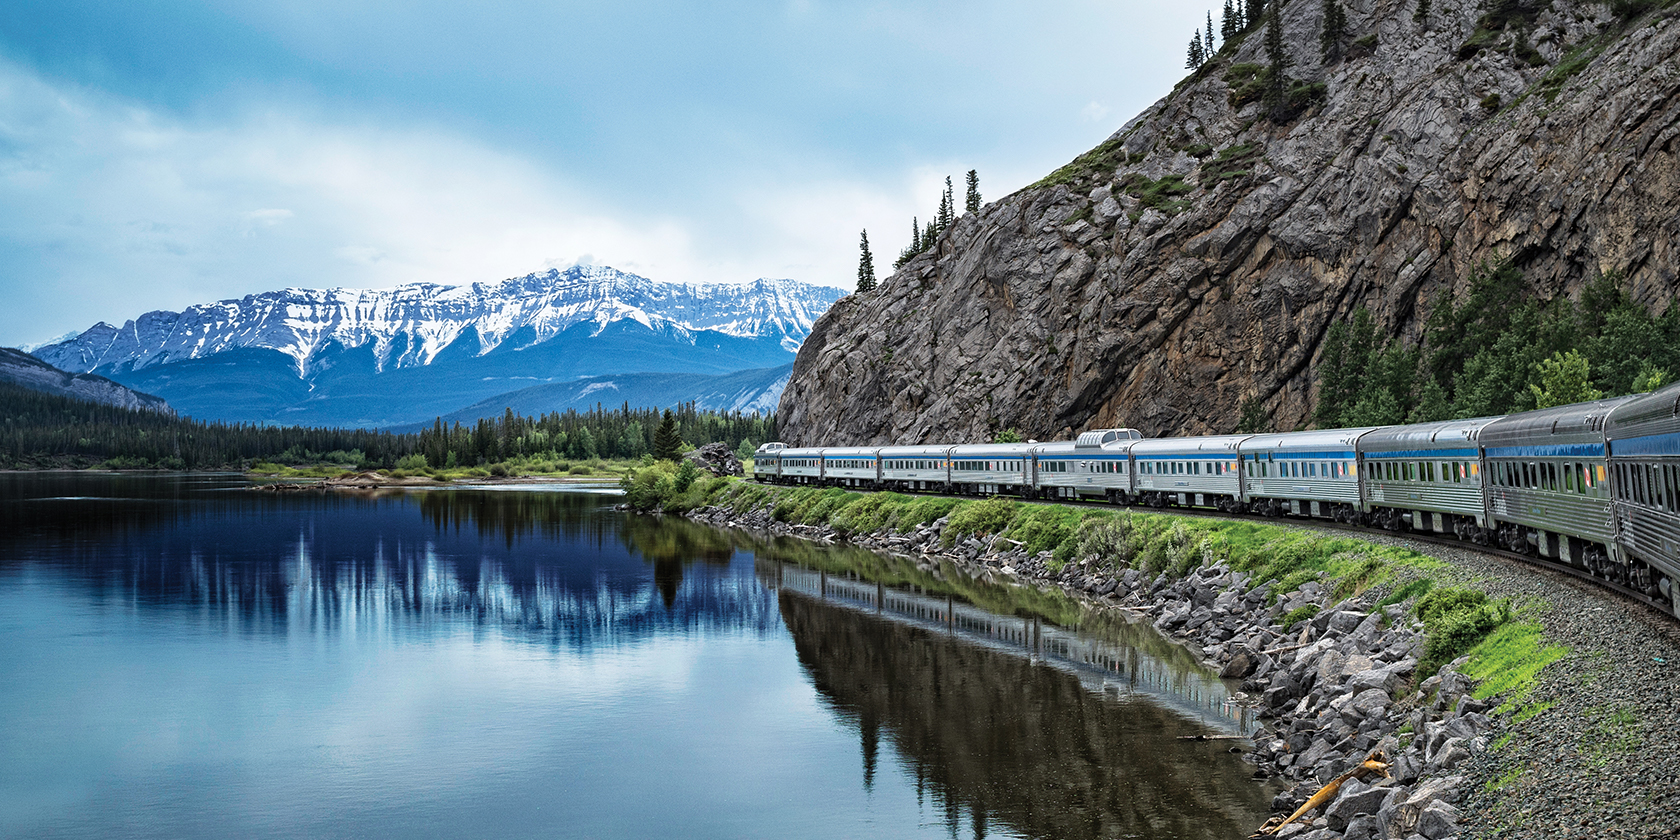 Train passing through mountains